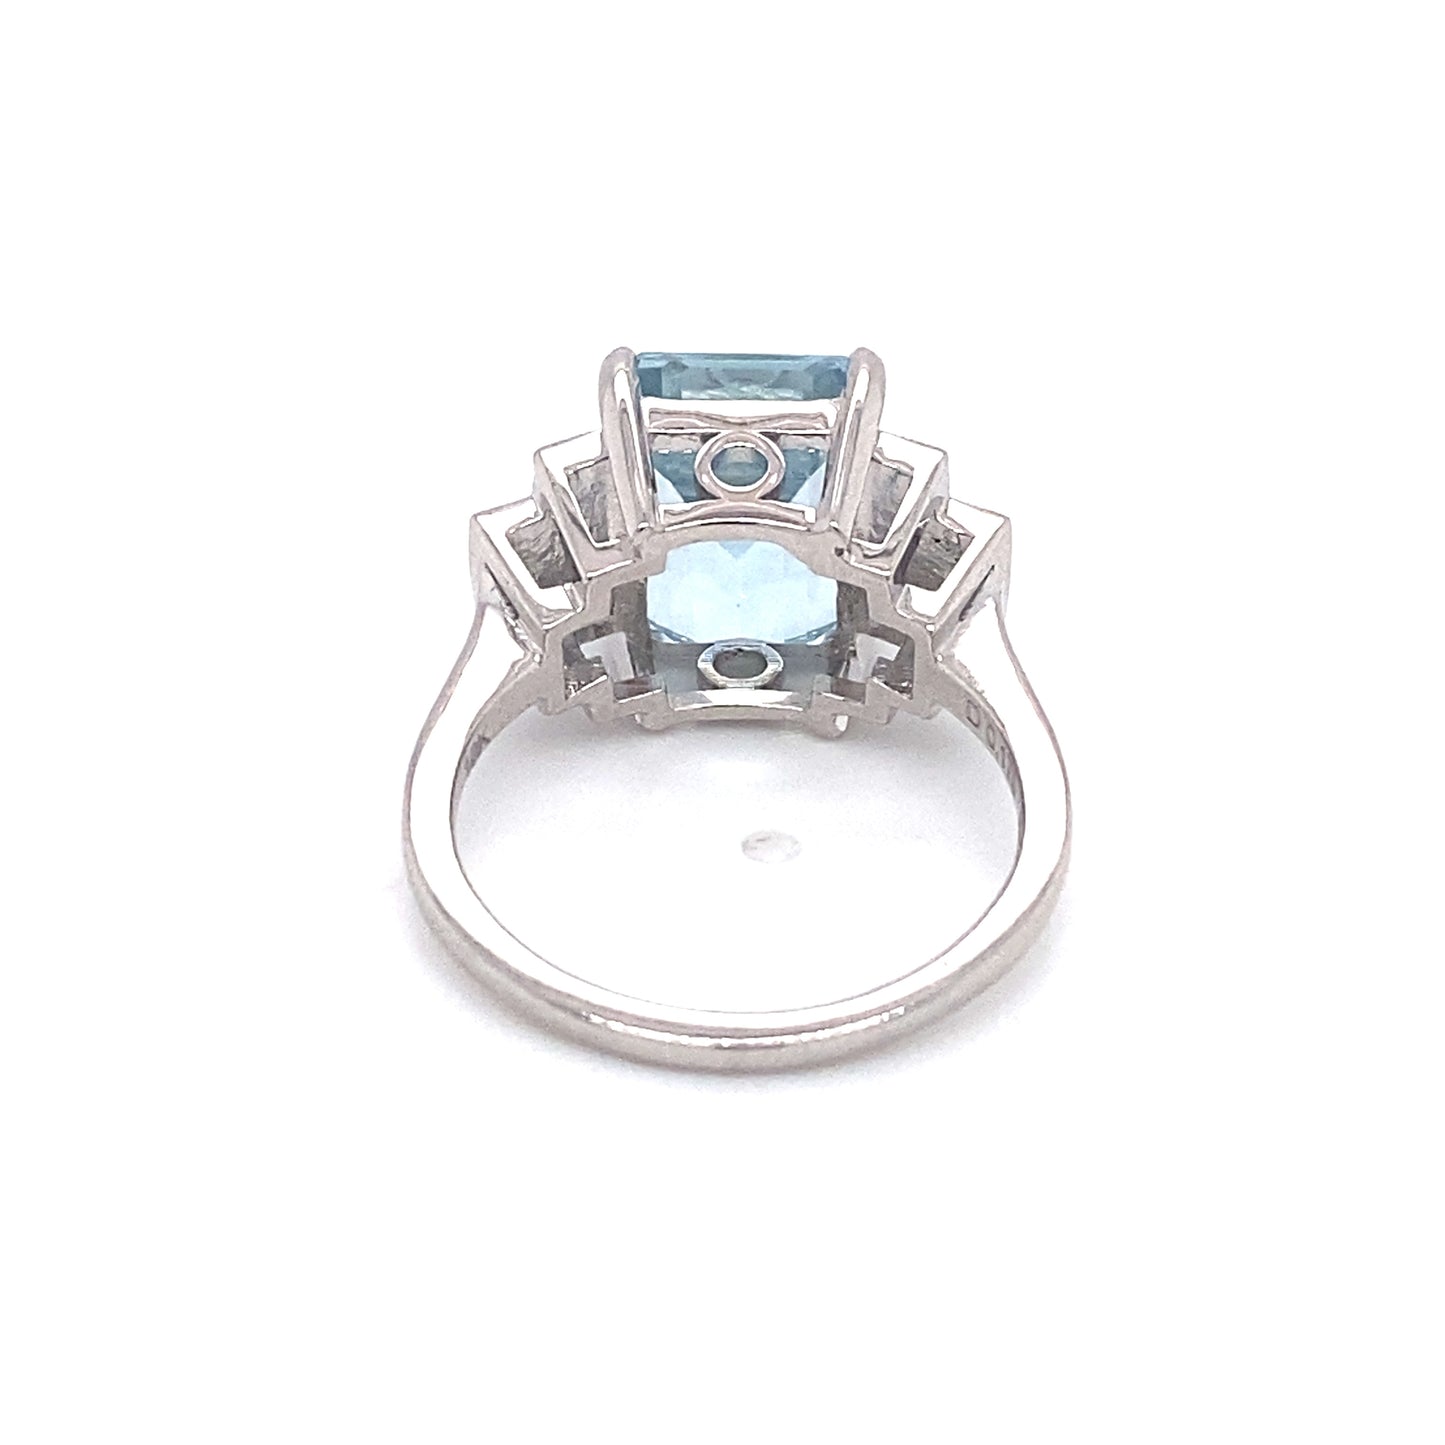 Circa 2000s 5.28 Carat Aquamarine and Diamond Ring in 18k White Gold